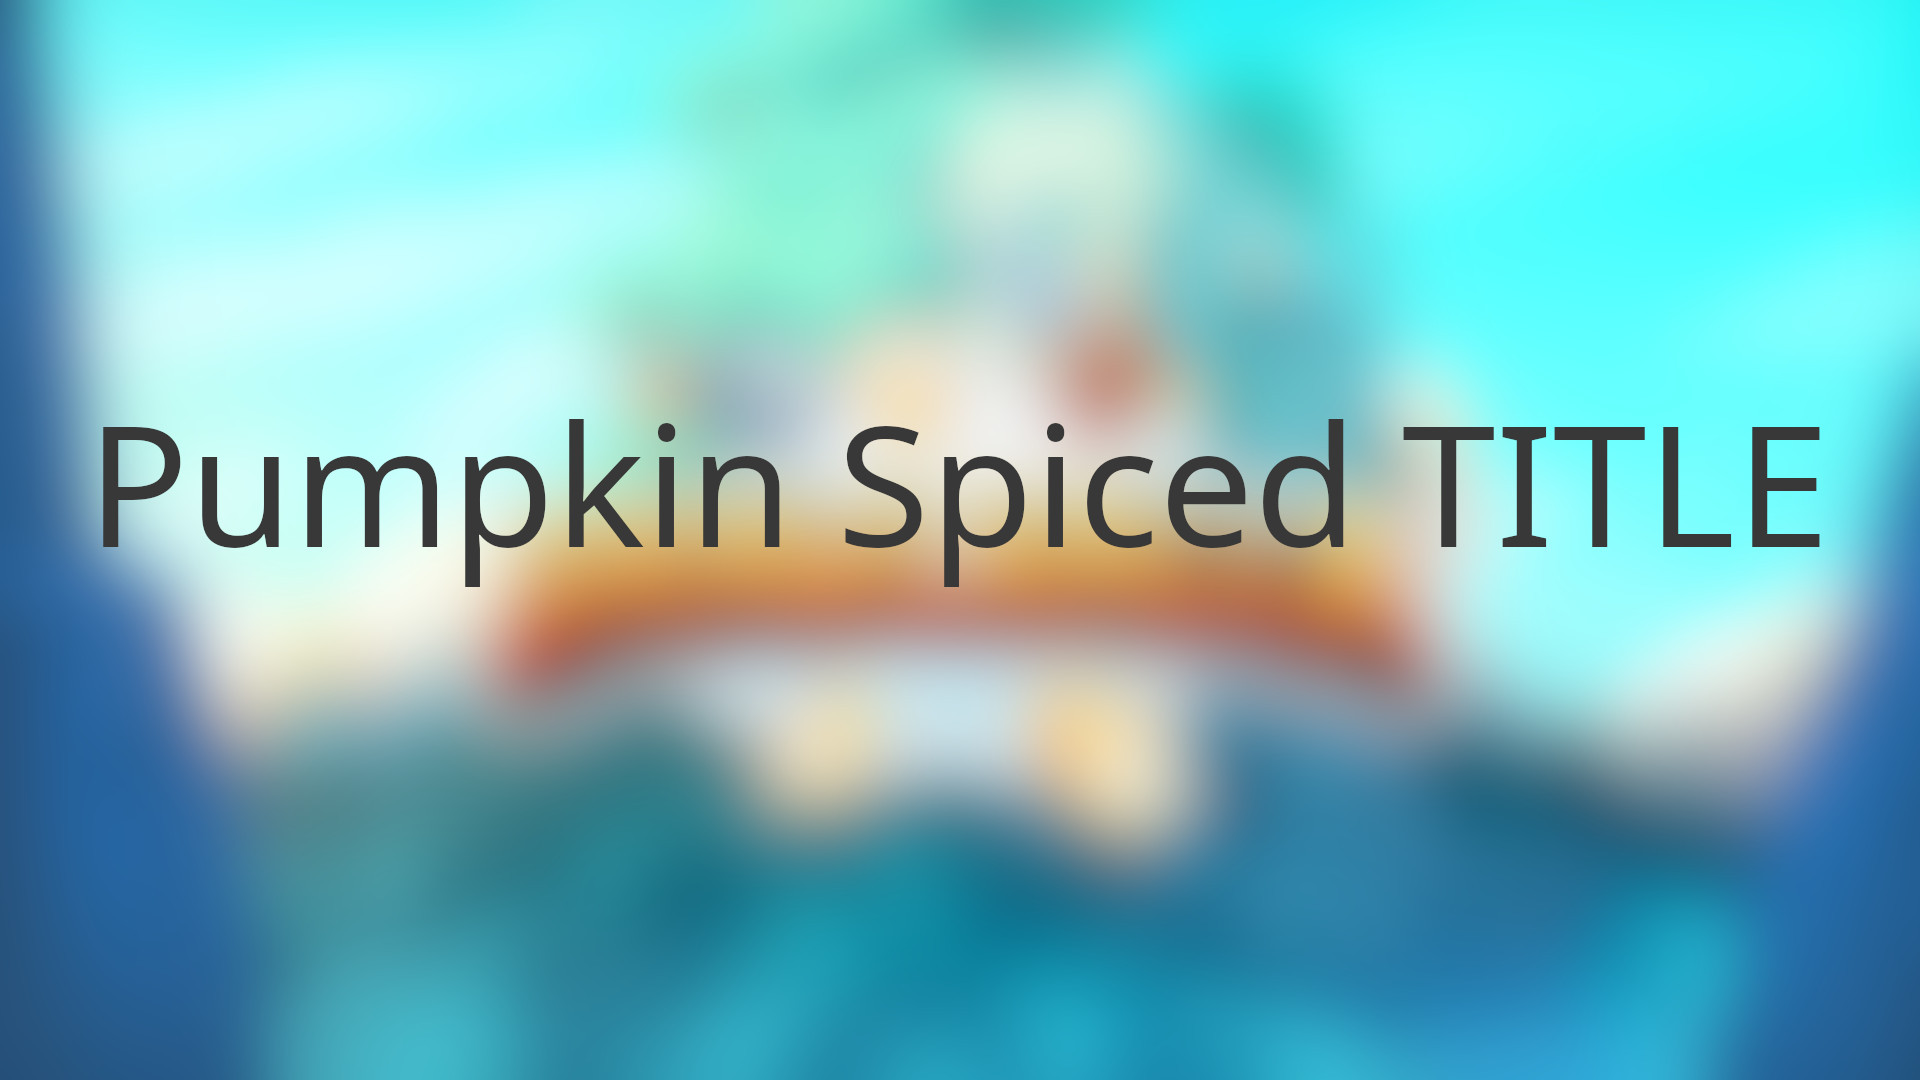 Brawlhalla - Pumpkin Spiced Title DLC CD Key [USD 0.29]